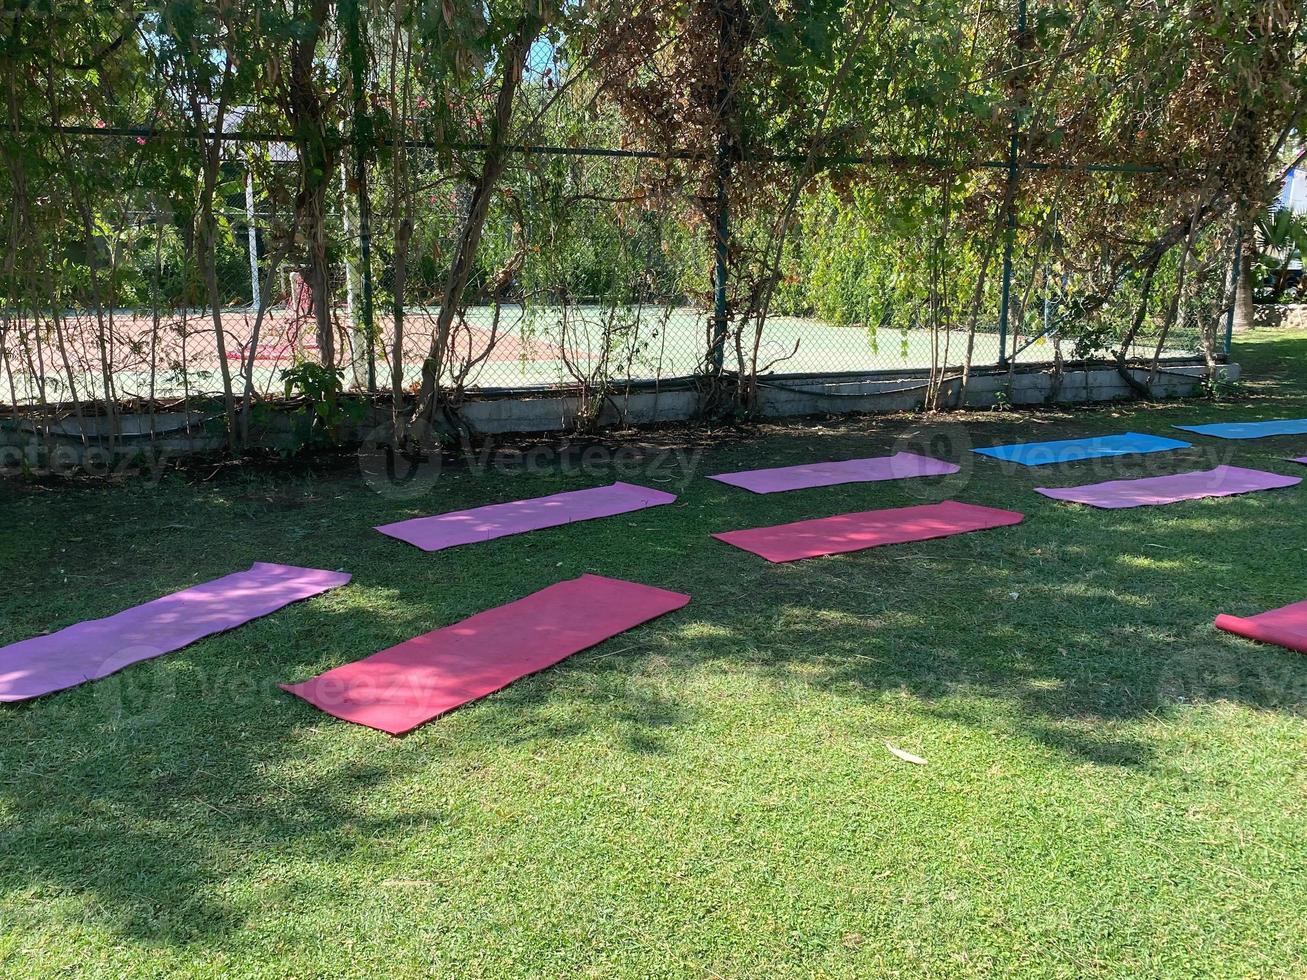 colchoneta de yoga sobre hierba verde, foto de primer plano, concepto de fitness